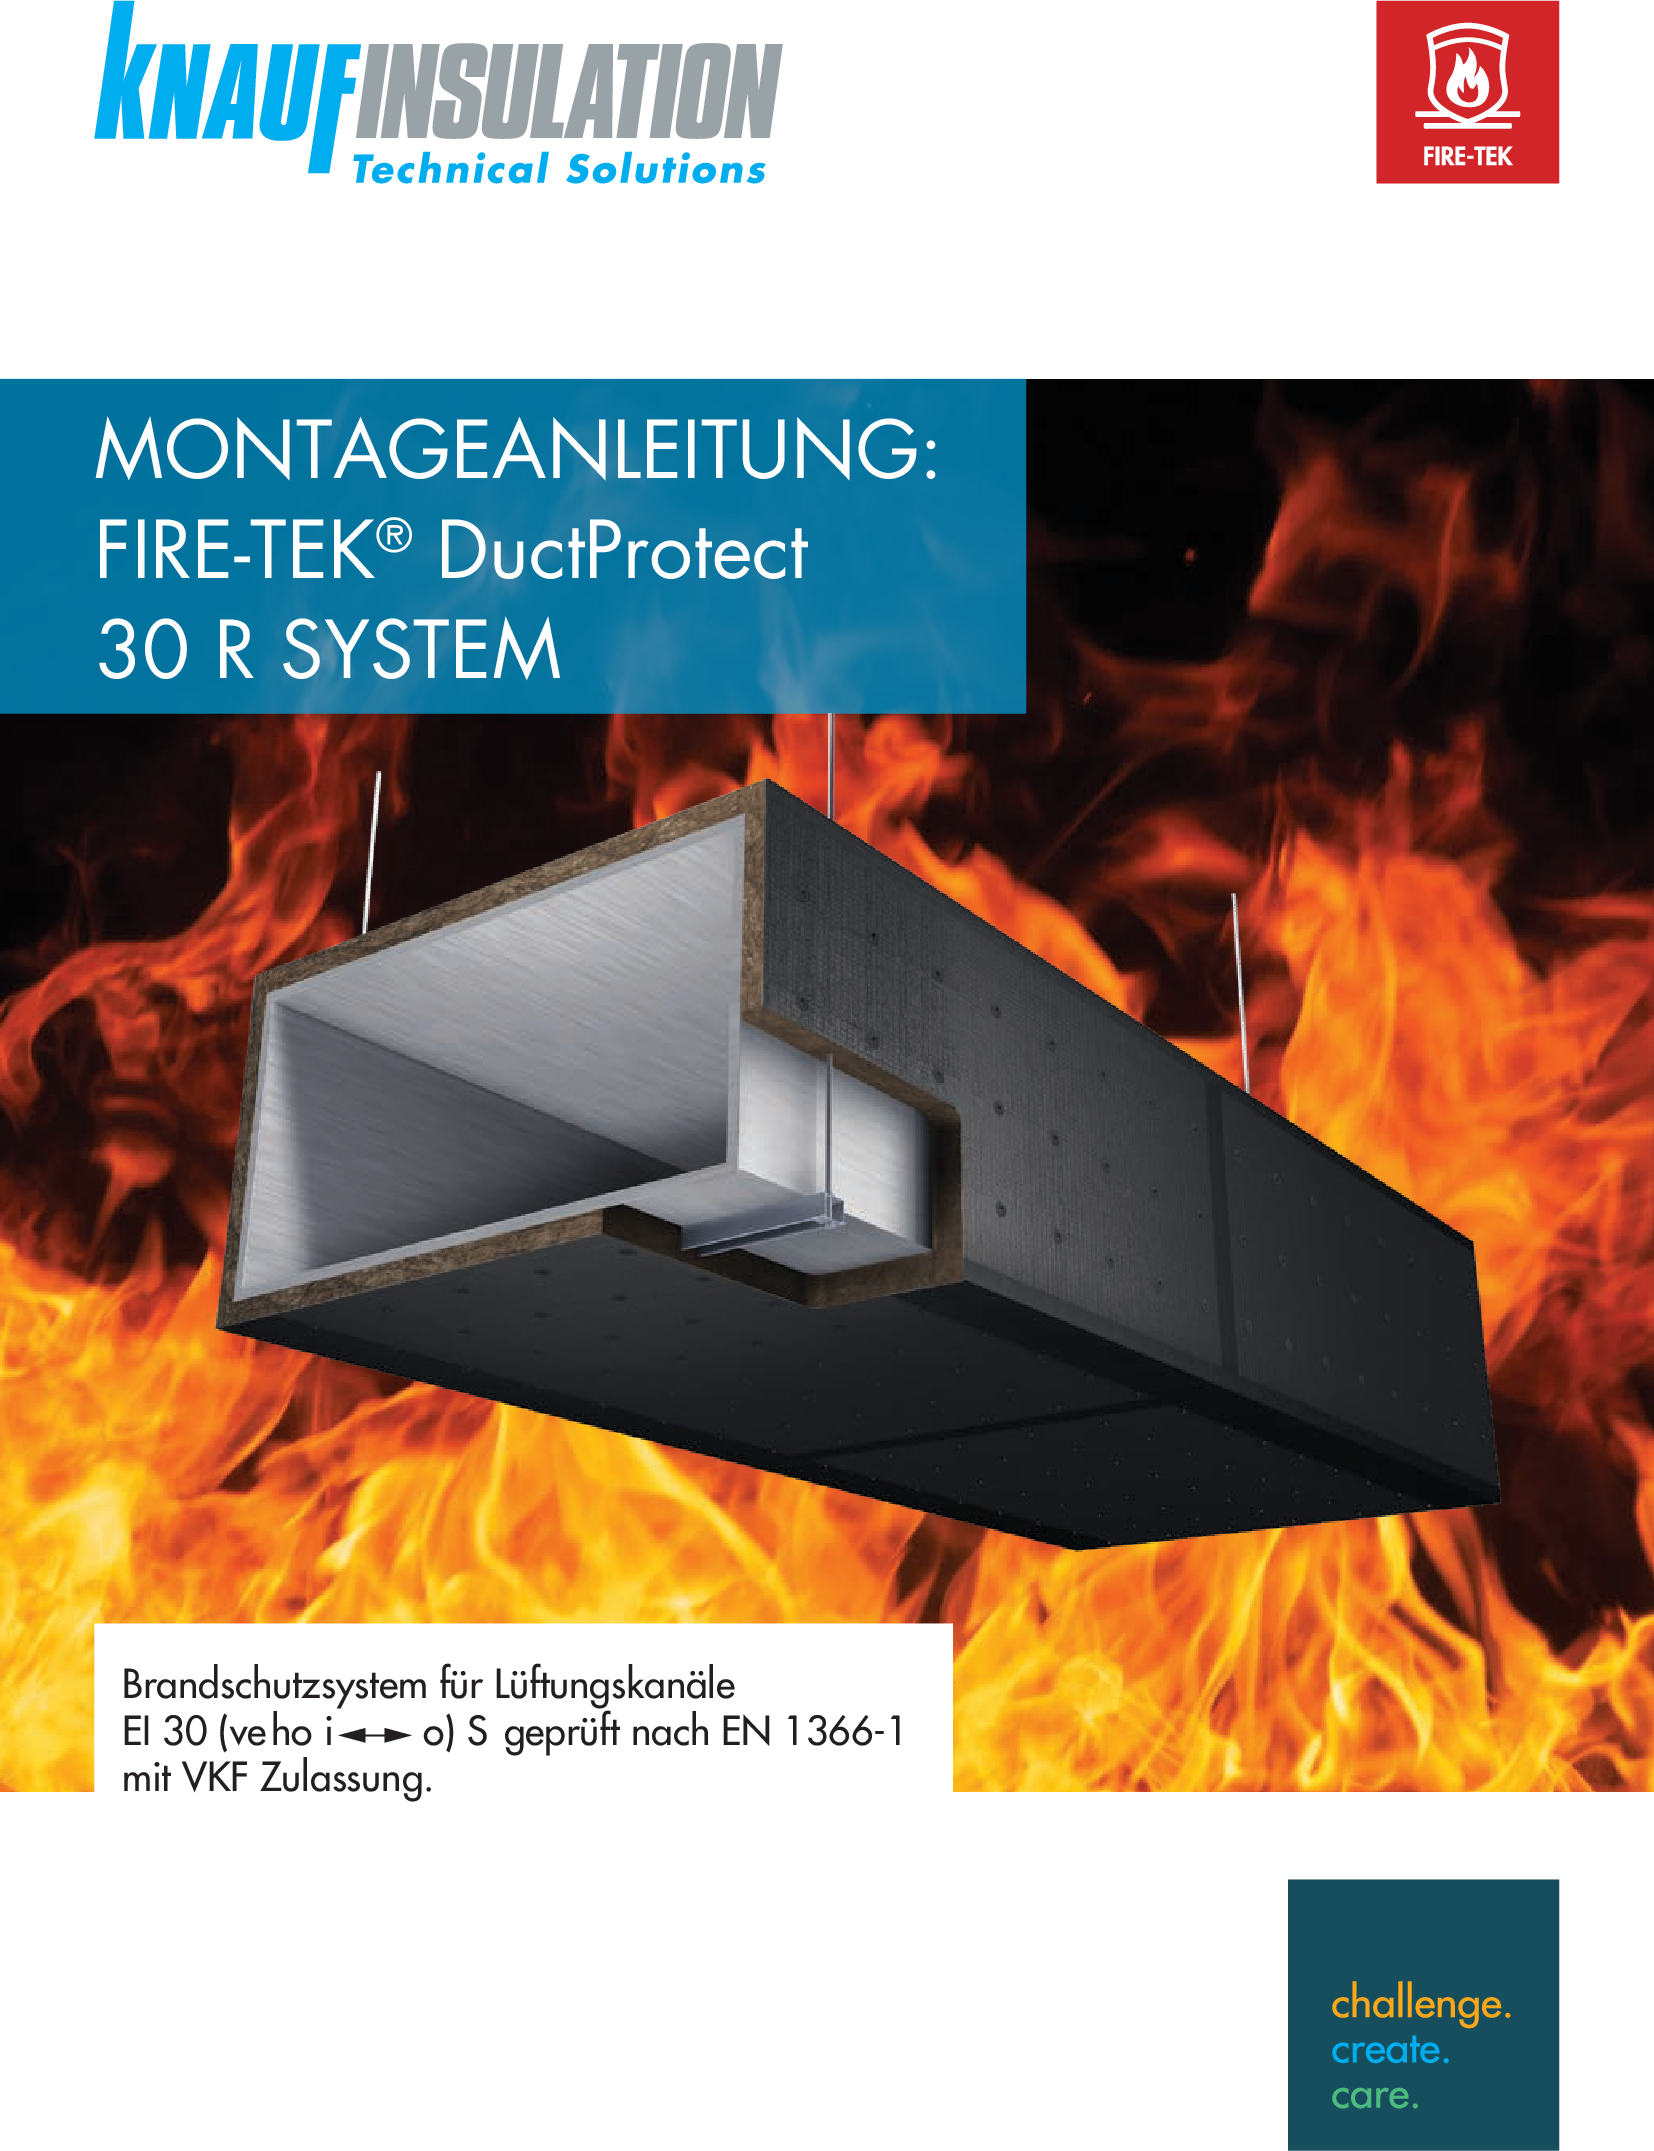 Fire-teK DuctProtect 30 R System Montageanleitung